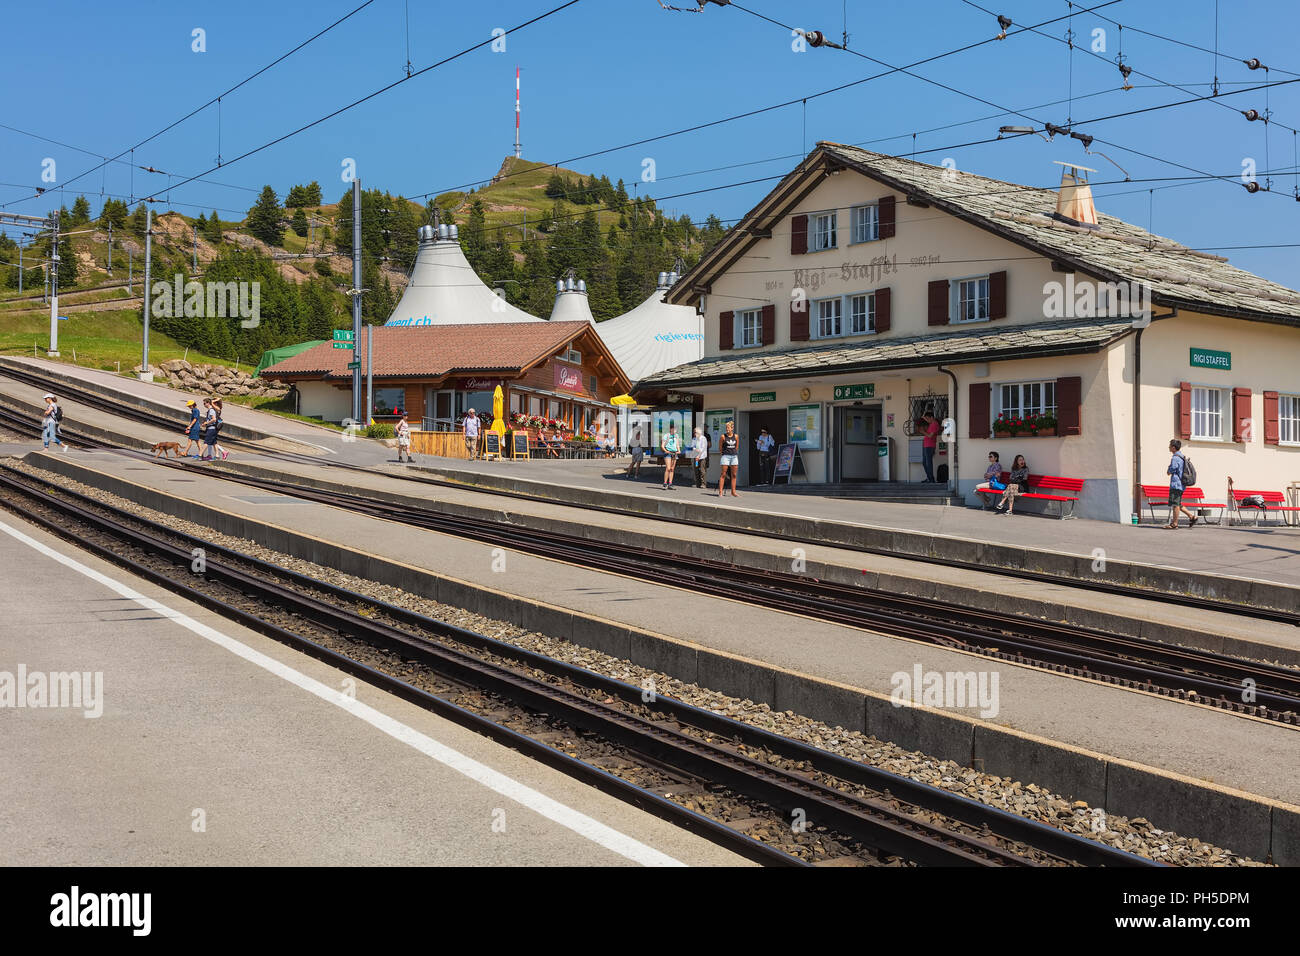 Rigi-Staffel railway station on Mt. Rigi in Switzerland Stock Photo